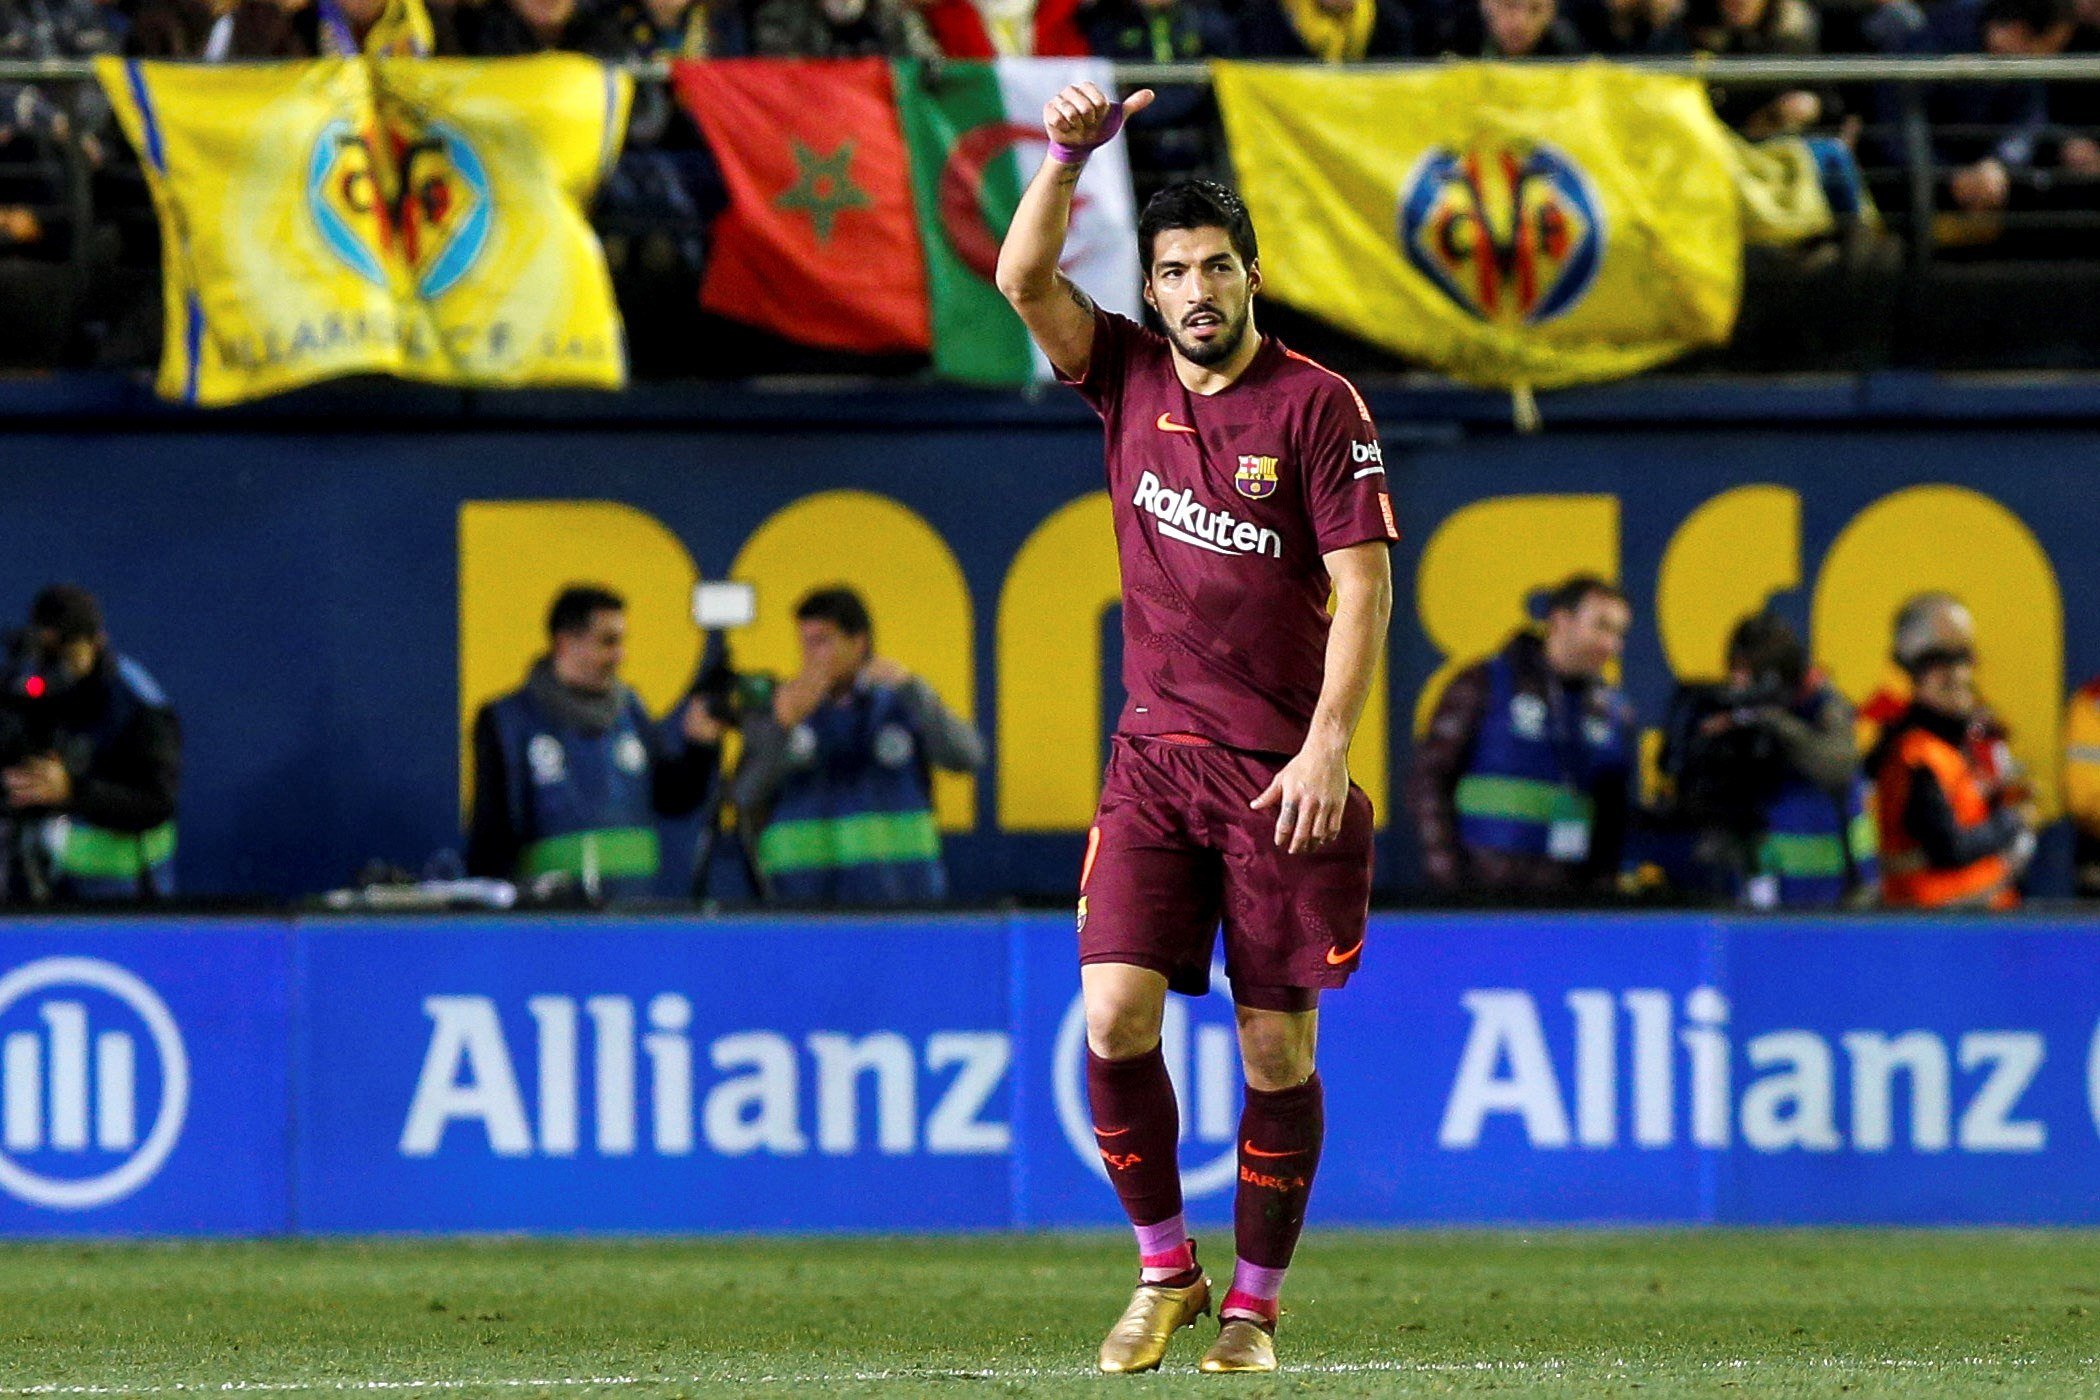 Els pals no aturen Messi ni Luis Suárez (0-2)